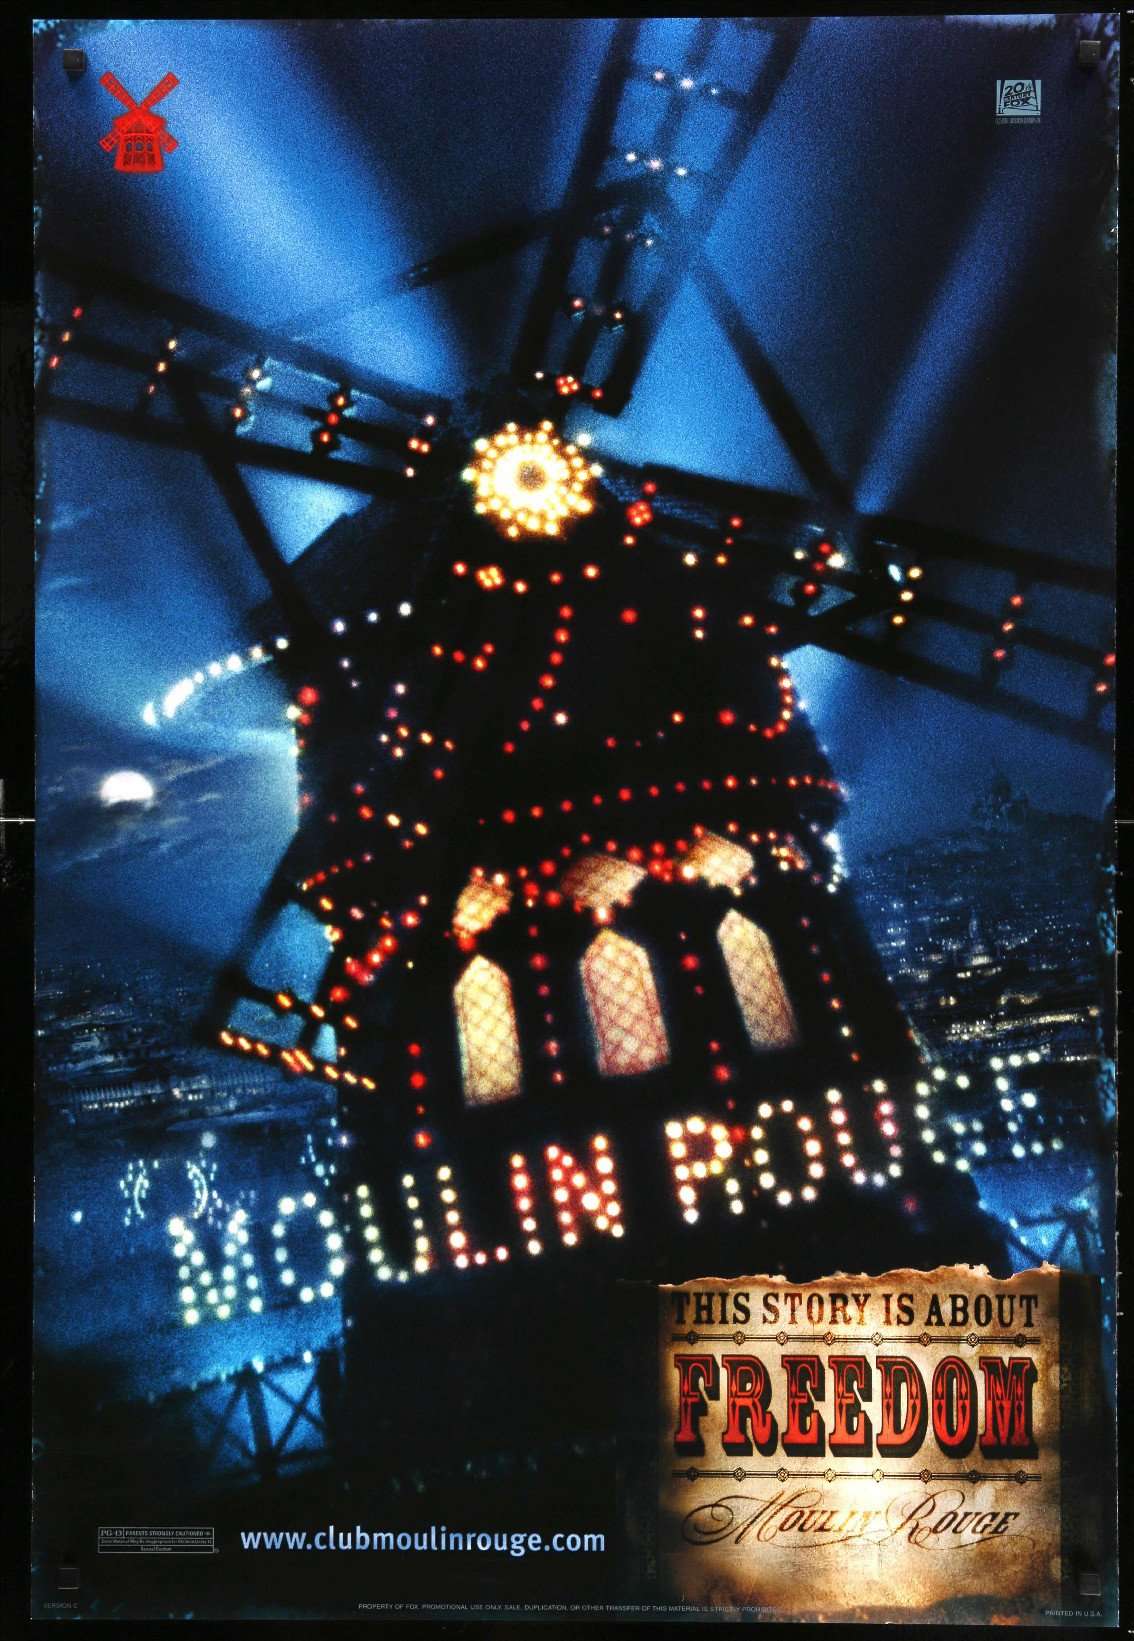 Moulin Rouge (2001) original movie poster for sale at Original Film Art